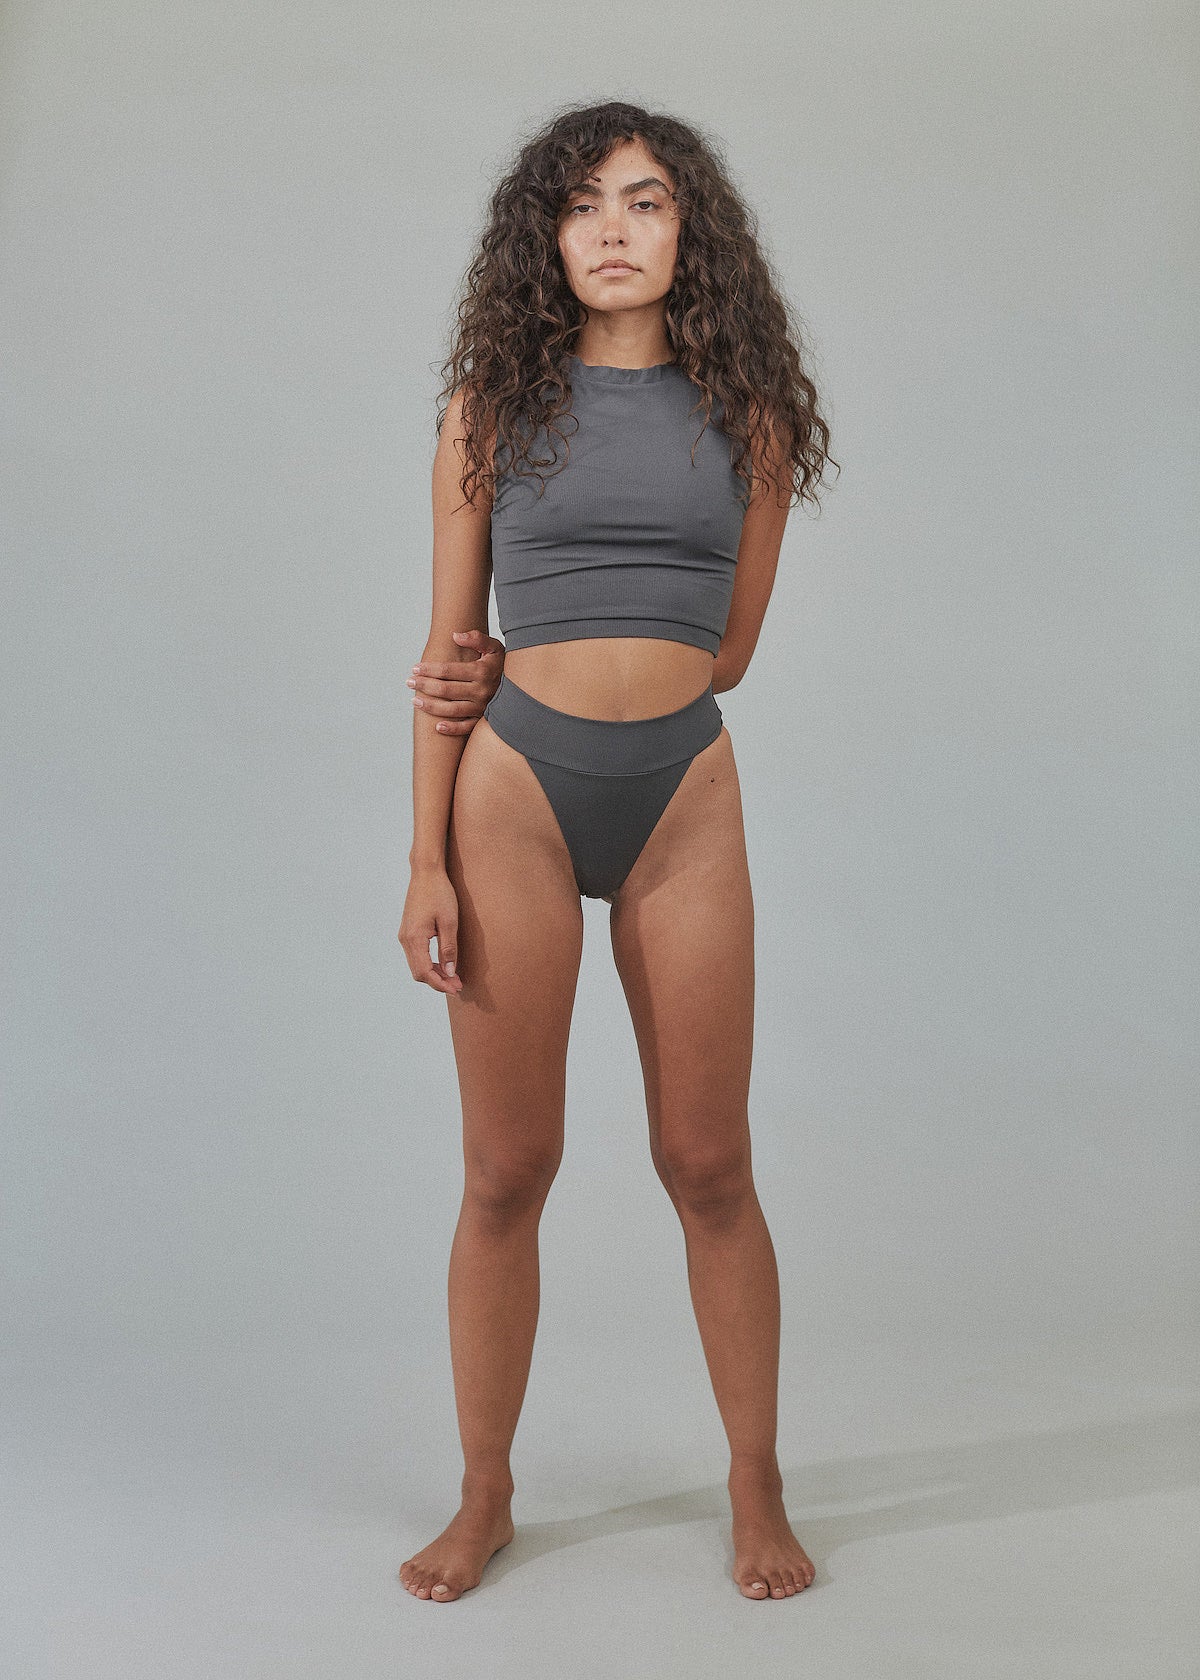 Acacia Swimwear Mateo Underwear in Garnet Snake - ShopperBoard